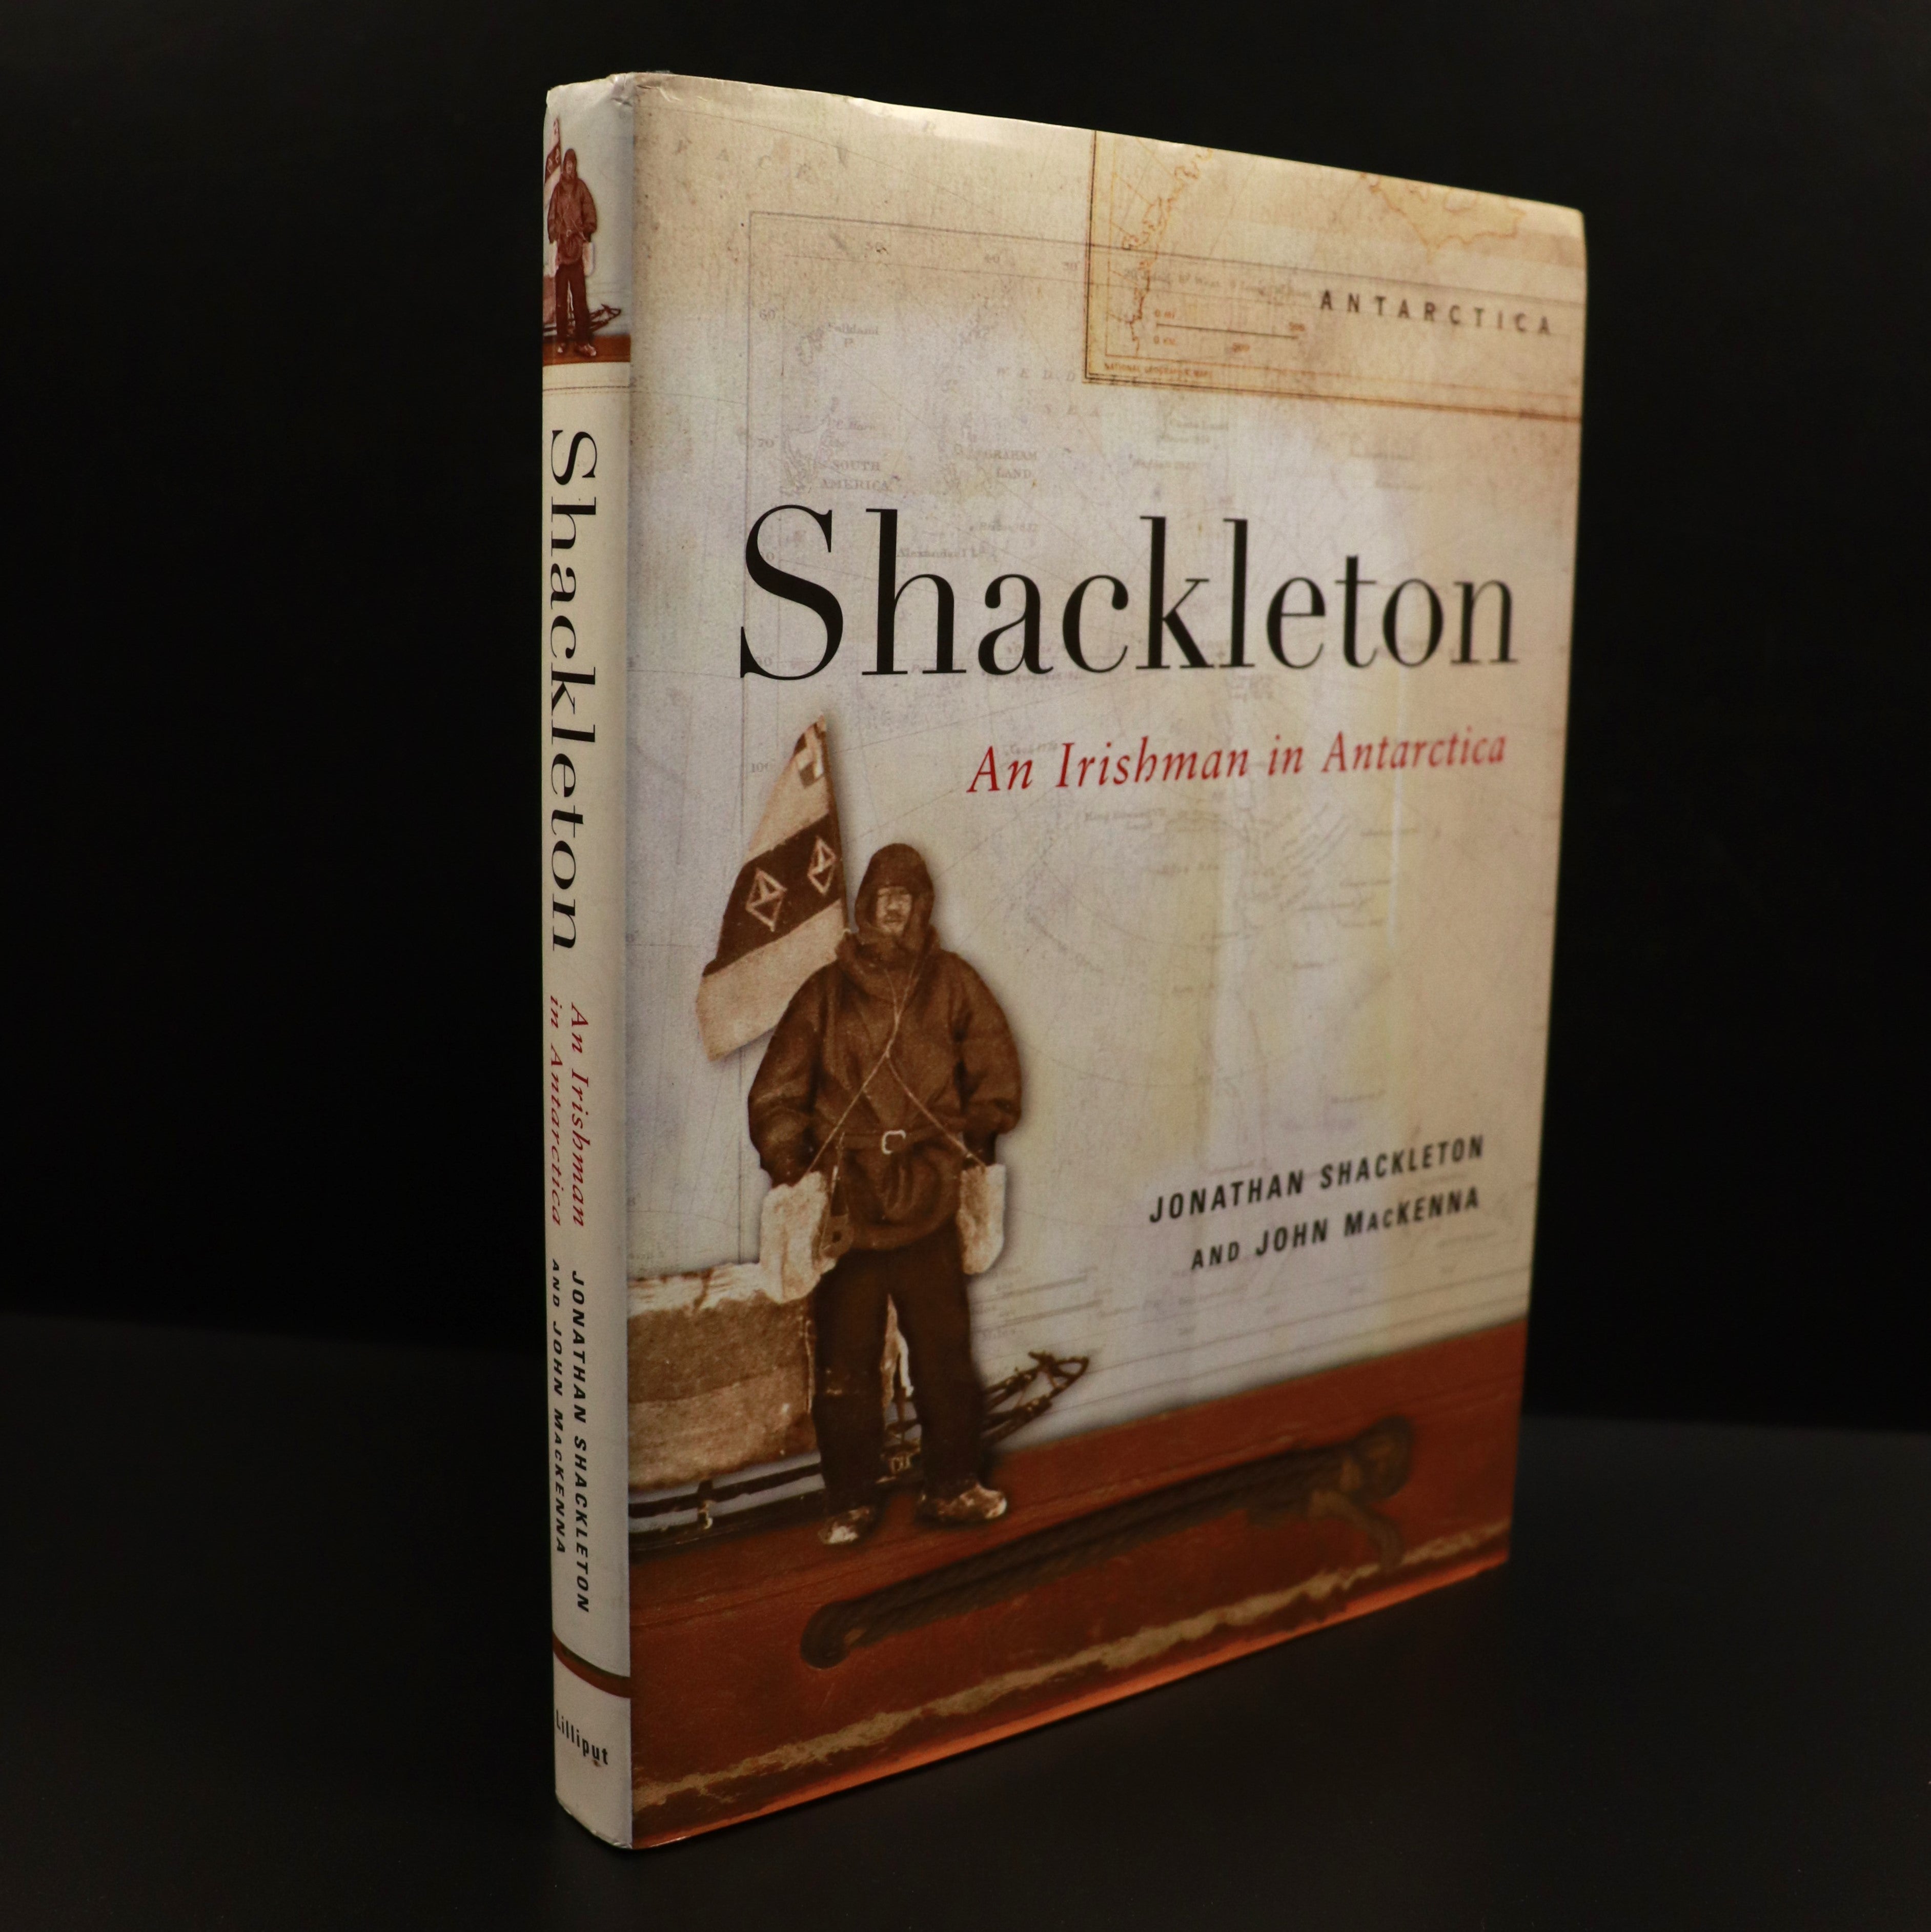 2002 Shackleton An Irishman In Antarctica Maritime Exploration History Book